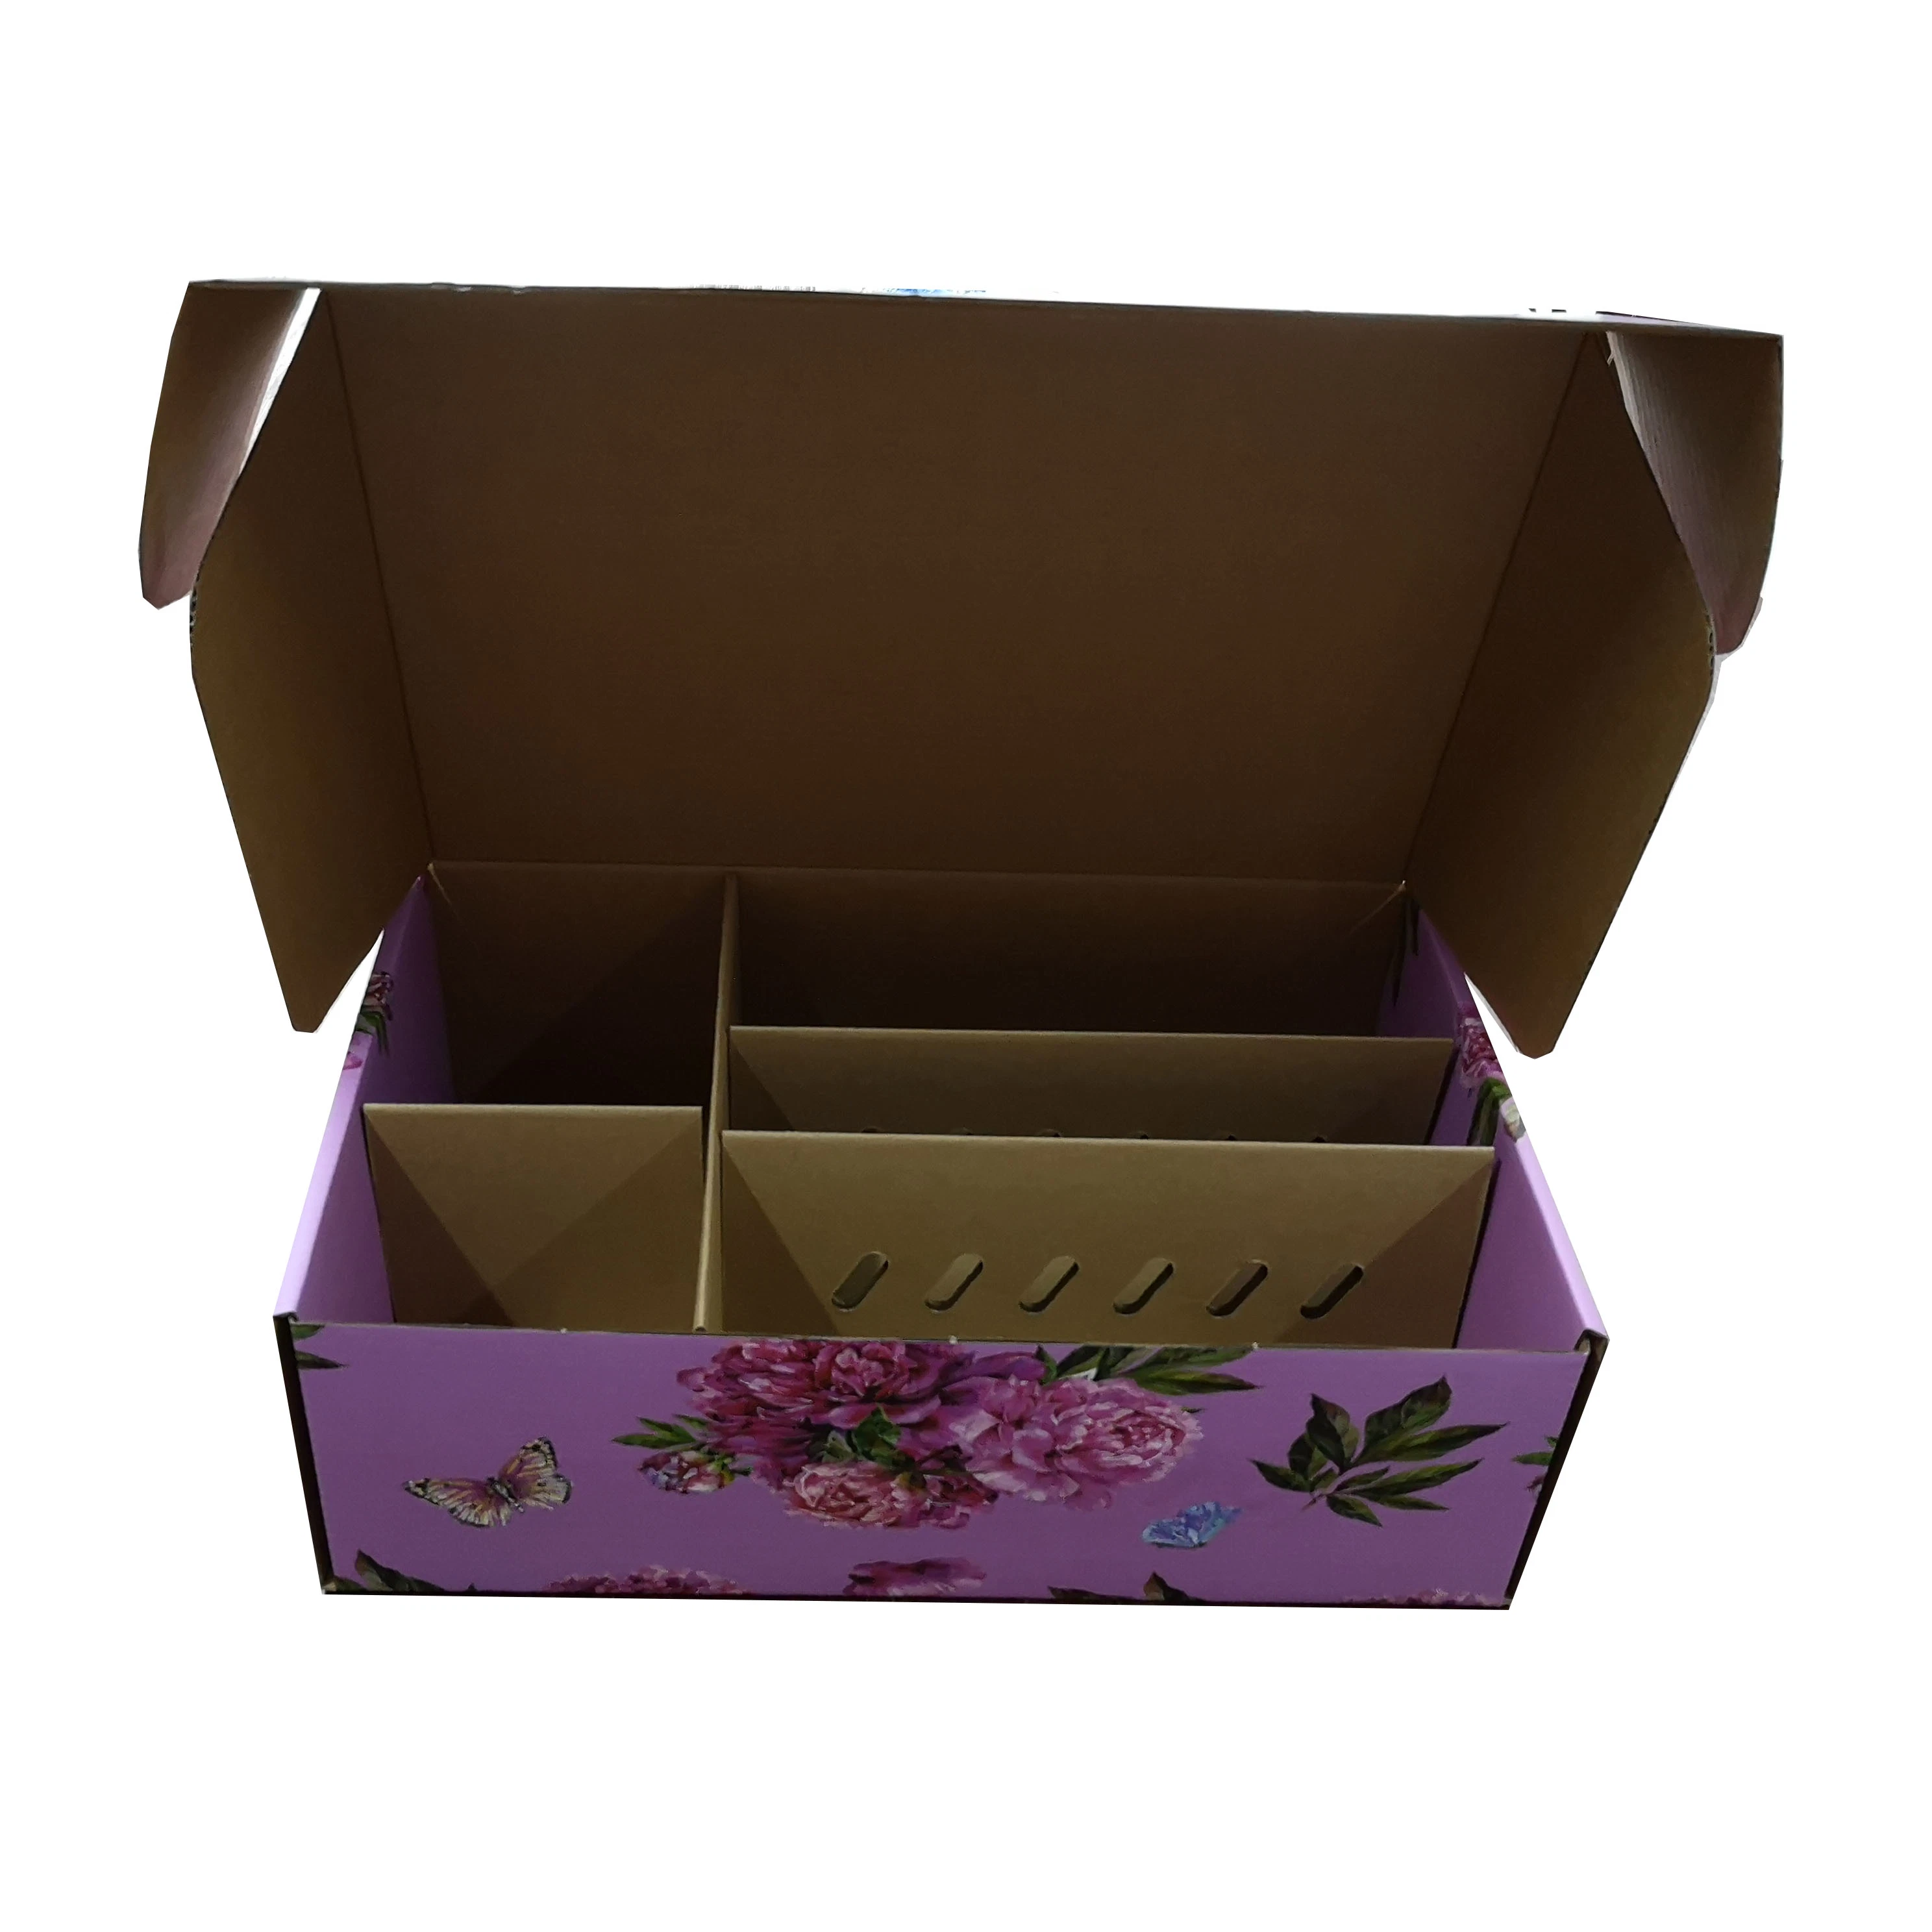 Cartón de alta calidad profesional de la fruta seca caja de cartón de embalaje